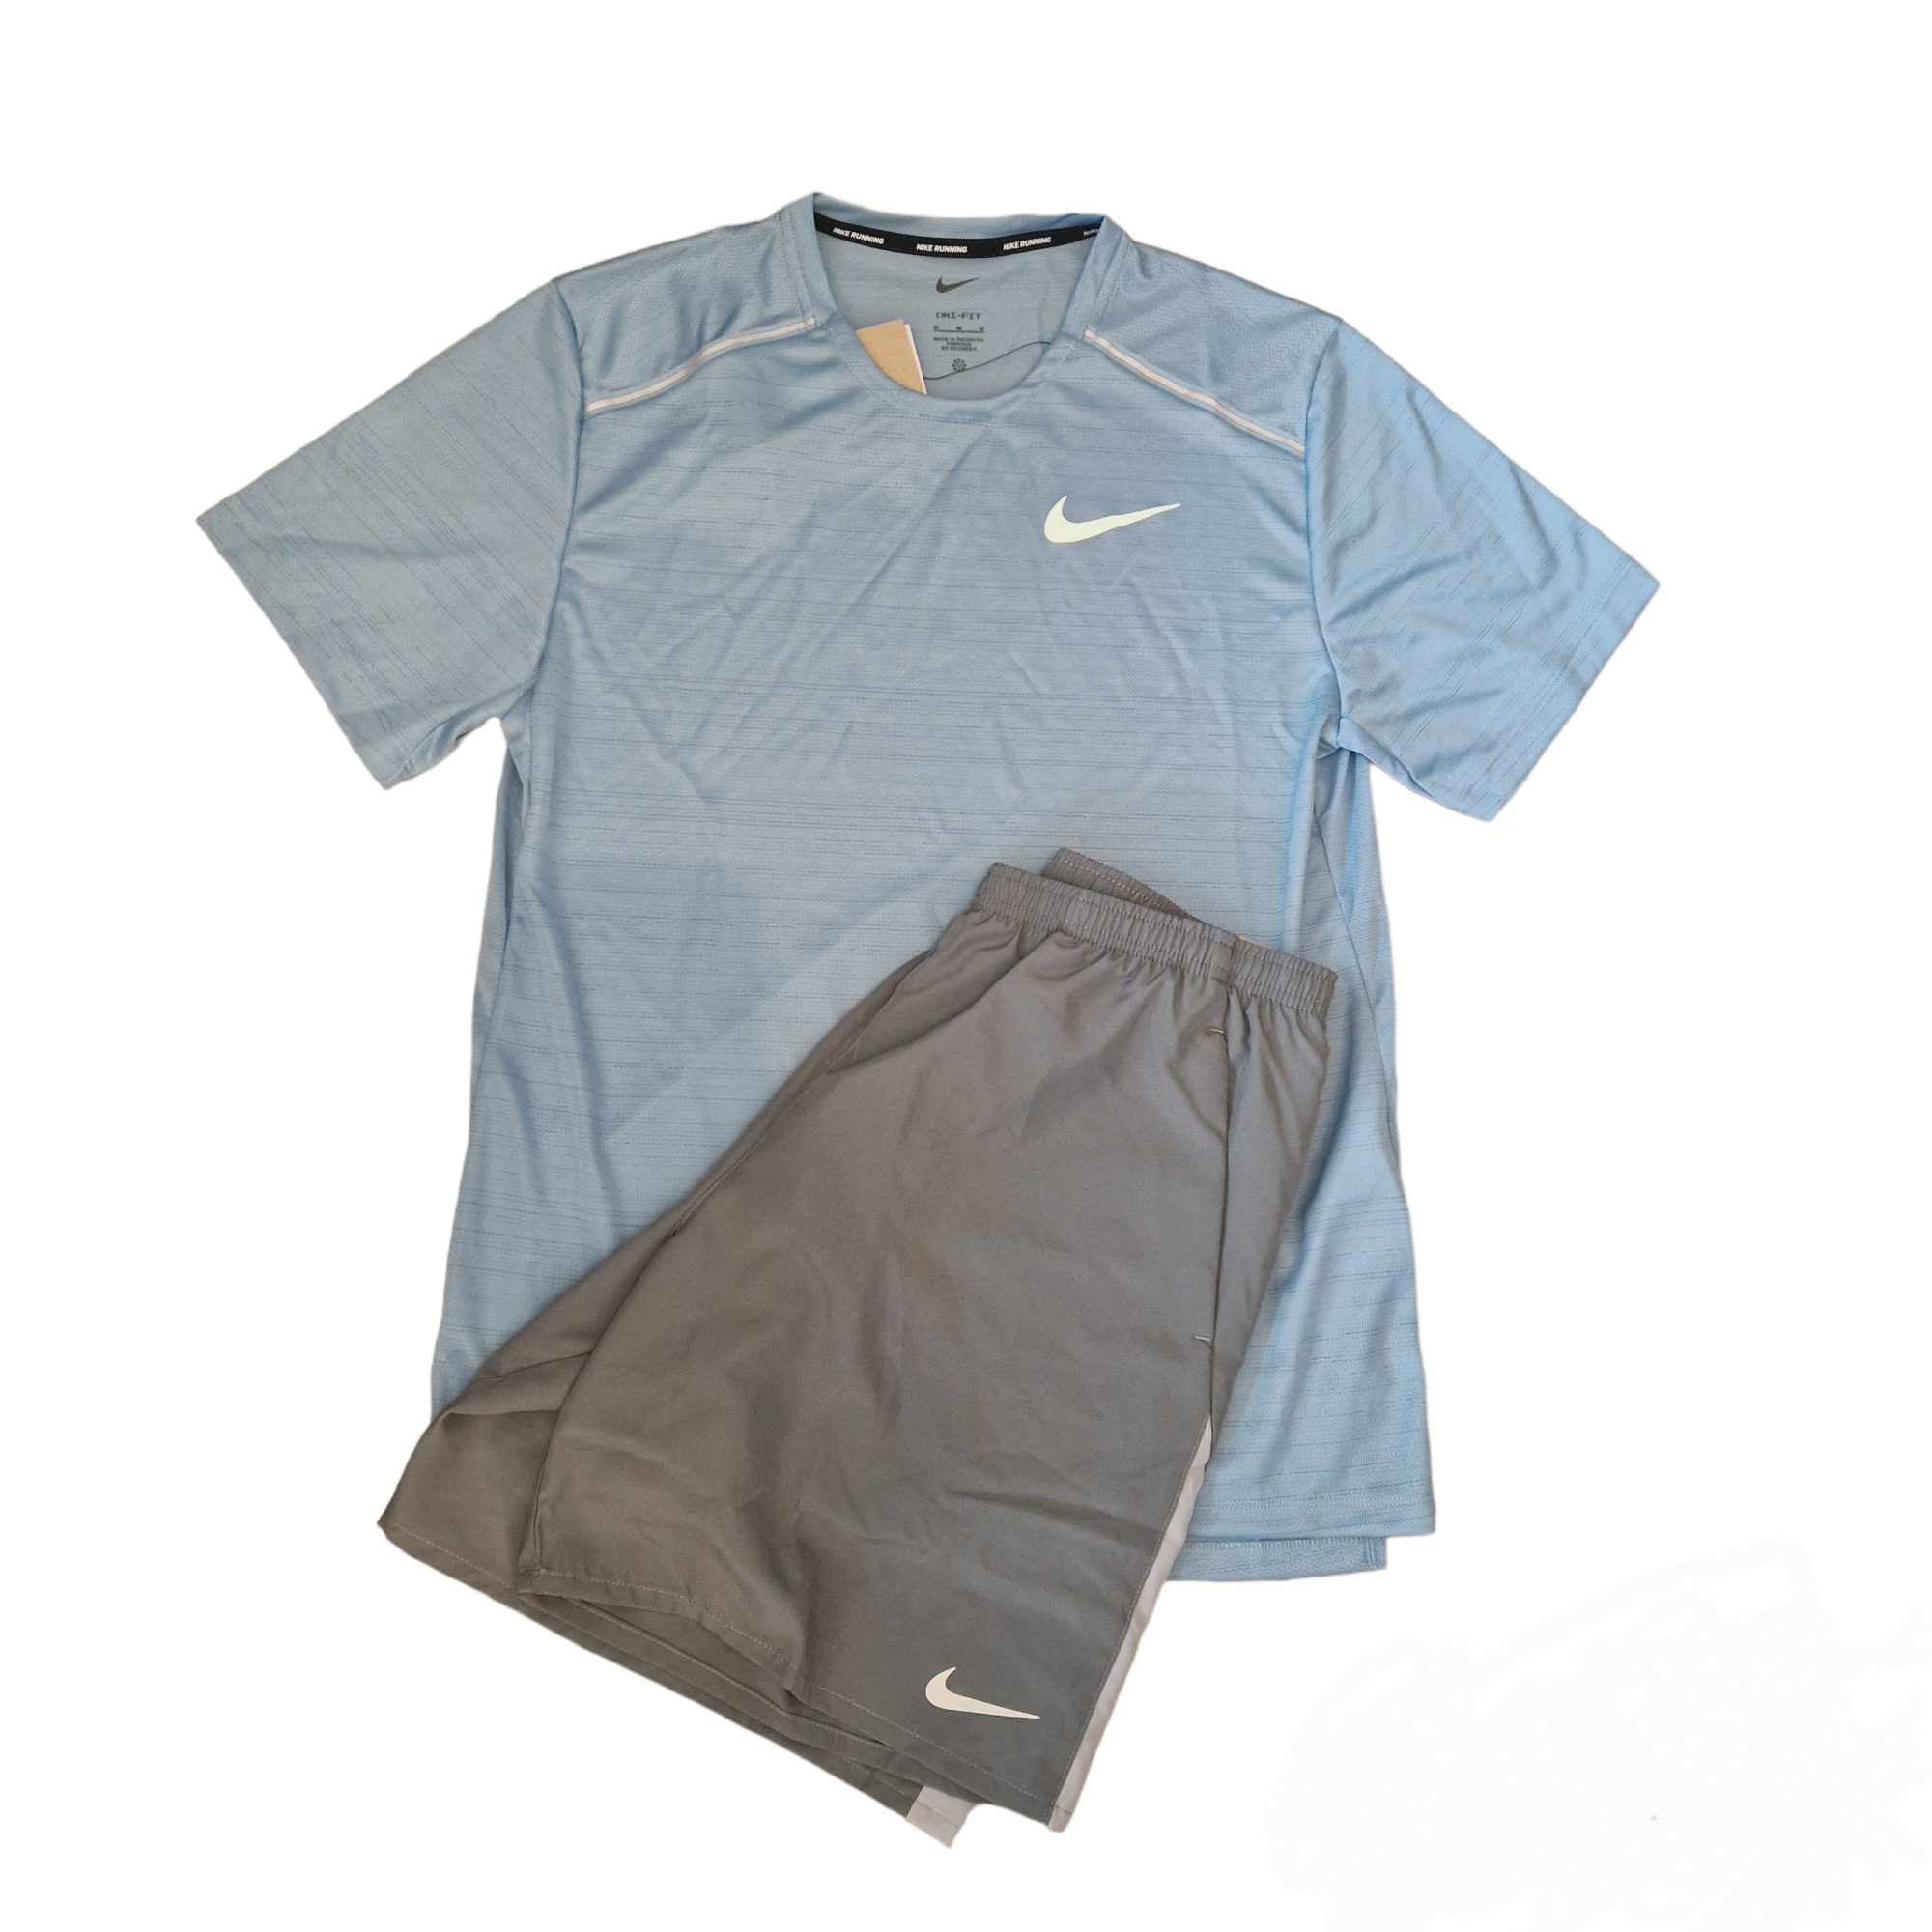 Nike Dri Fit Shorts Set Worn Blue